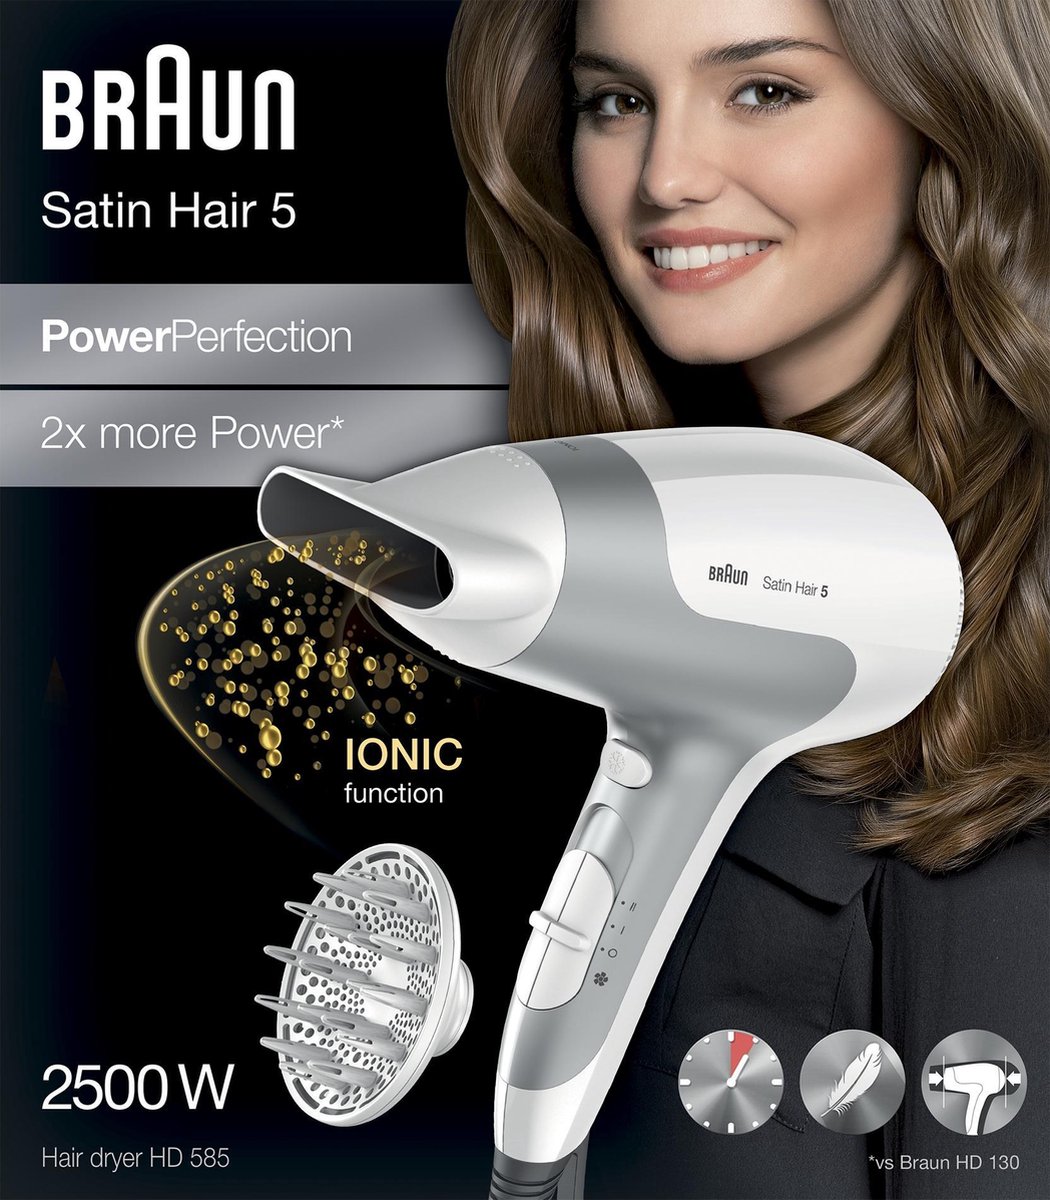 Braun Satin Hair 5 PowerPerfection - |